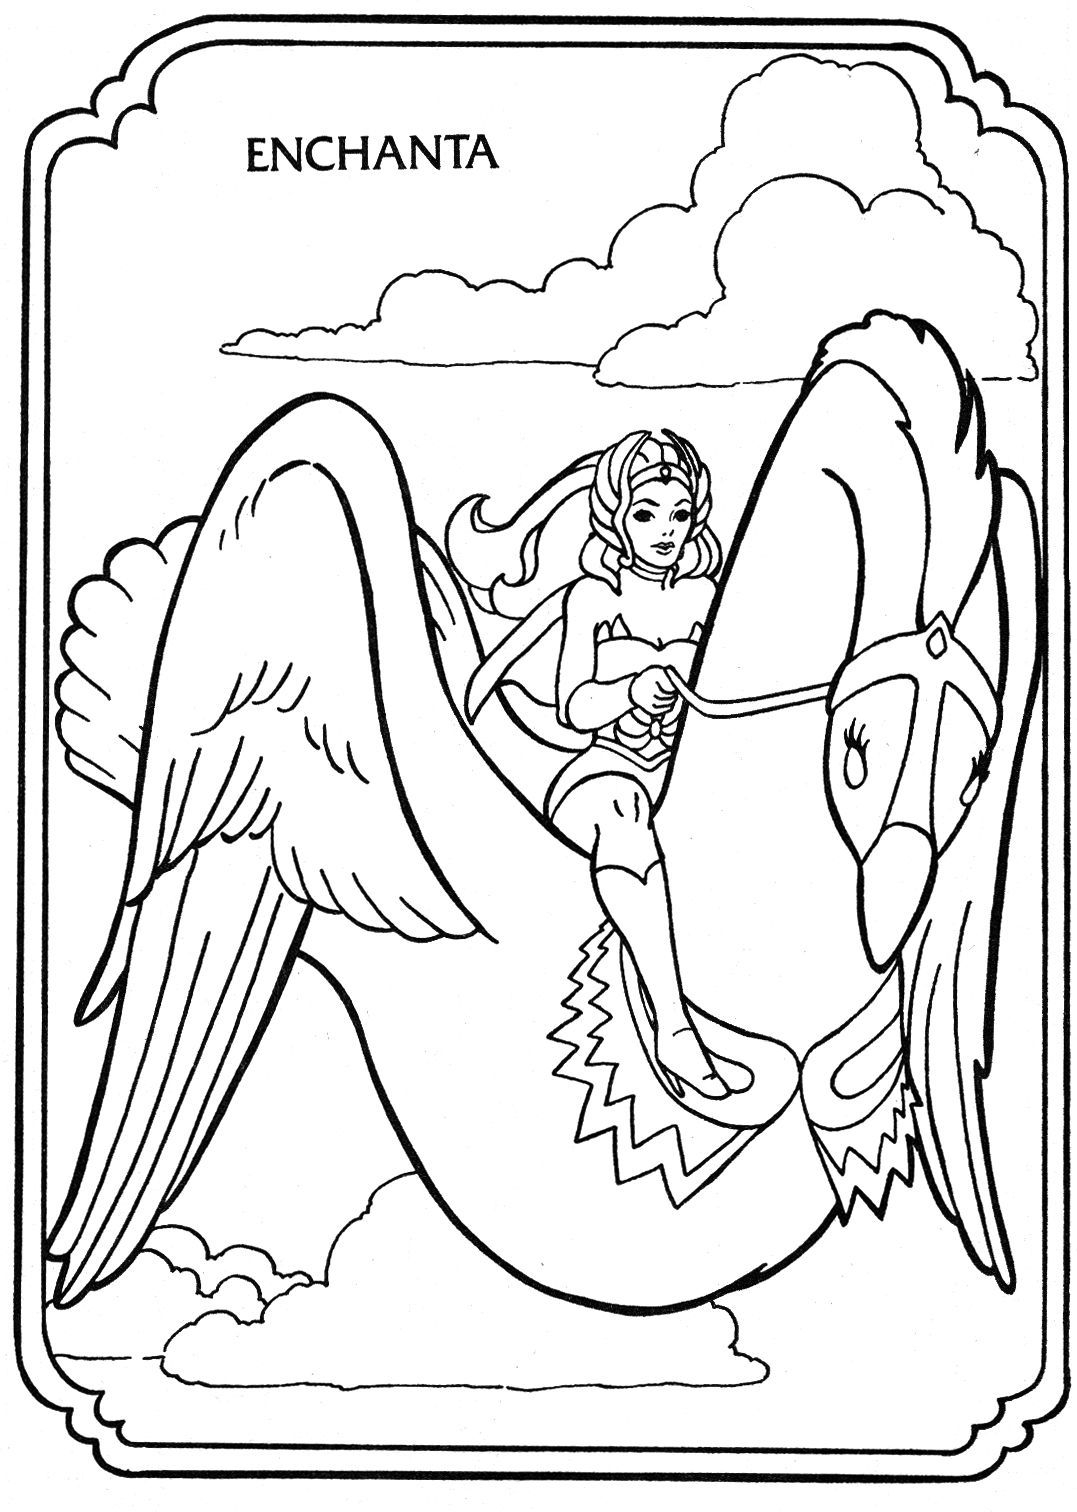 She-Ra: Princess of Power (1985) - coloring book 23